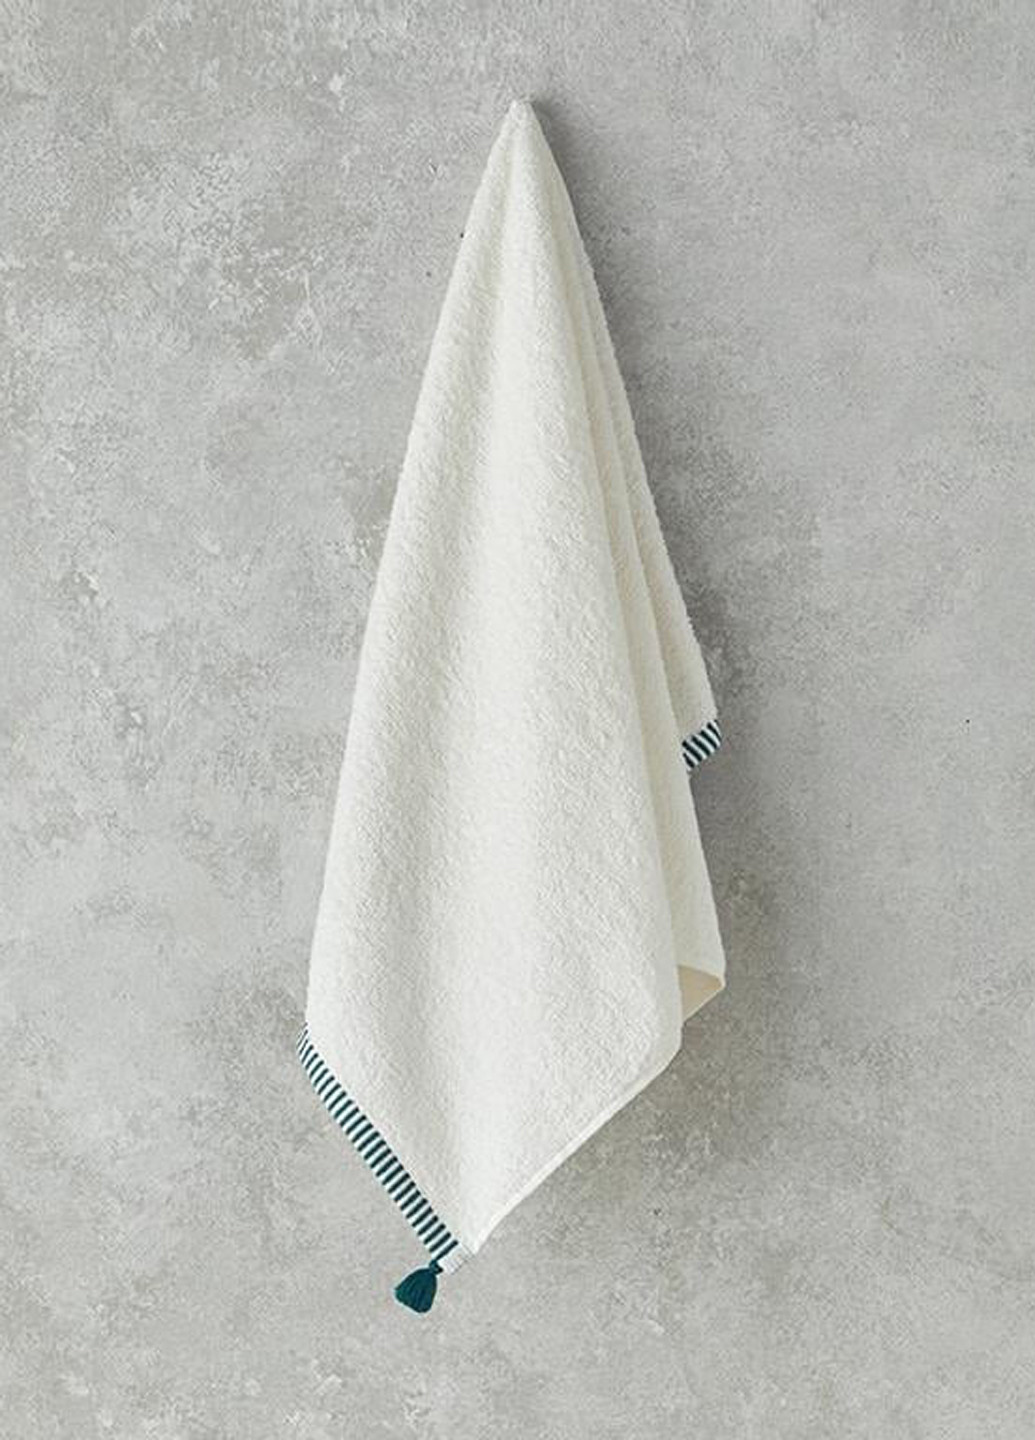 English Home полотенце для лица, 50х80 см полоска зеленый производство - Турция